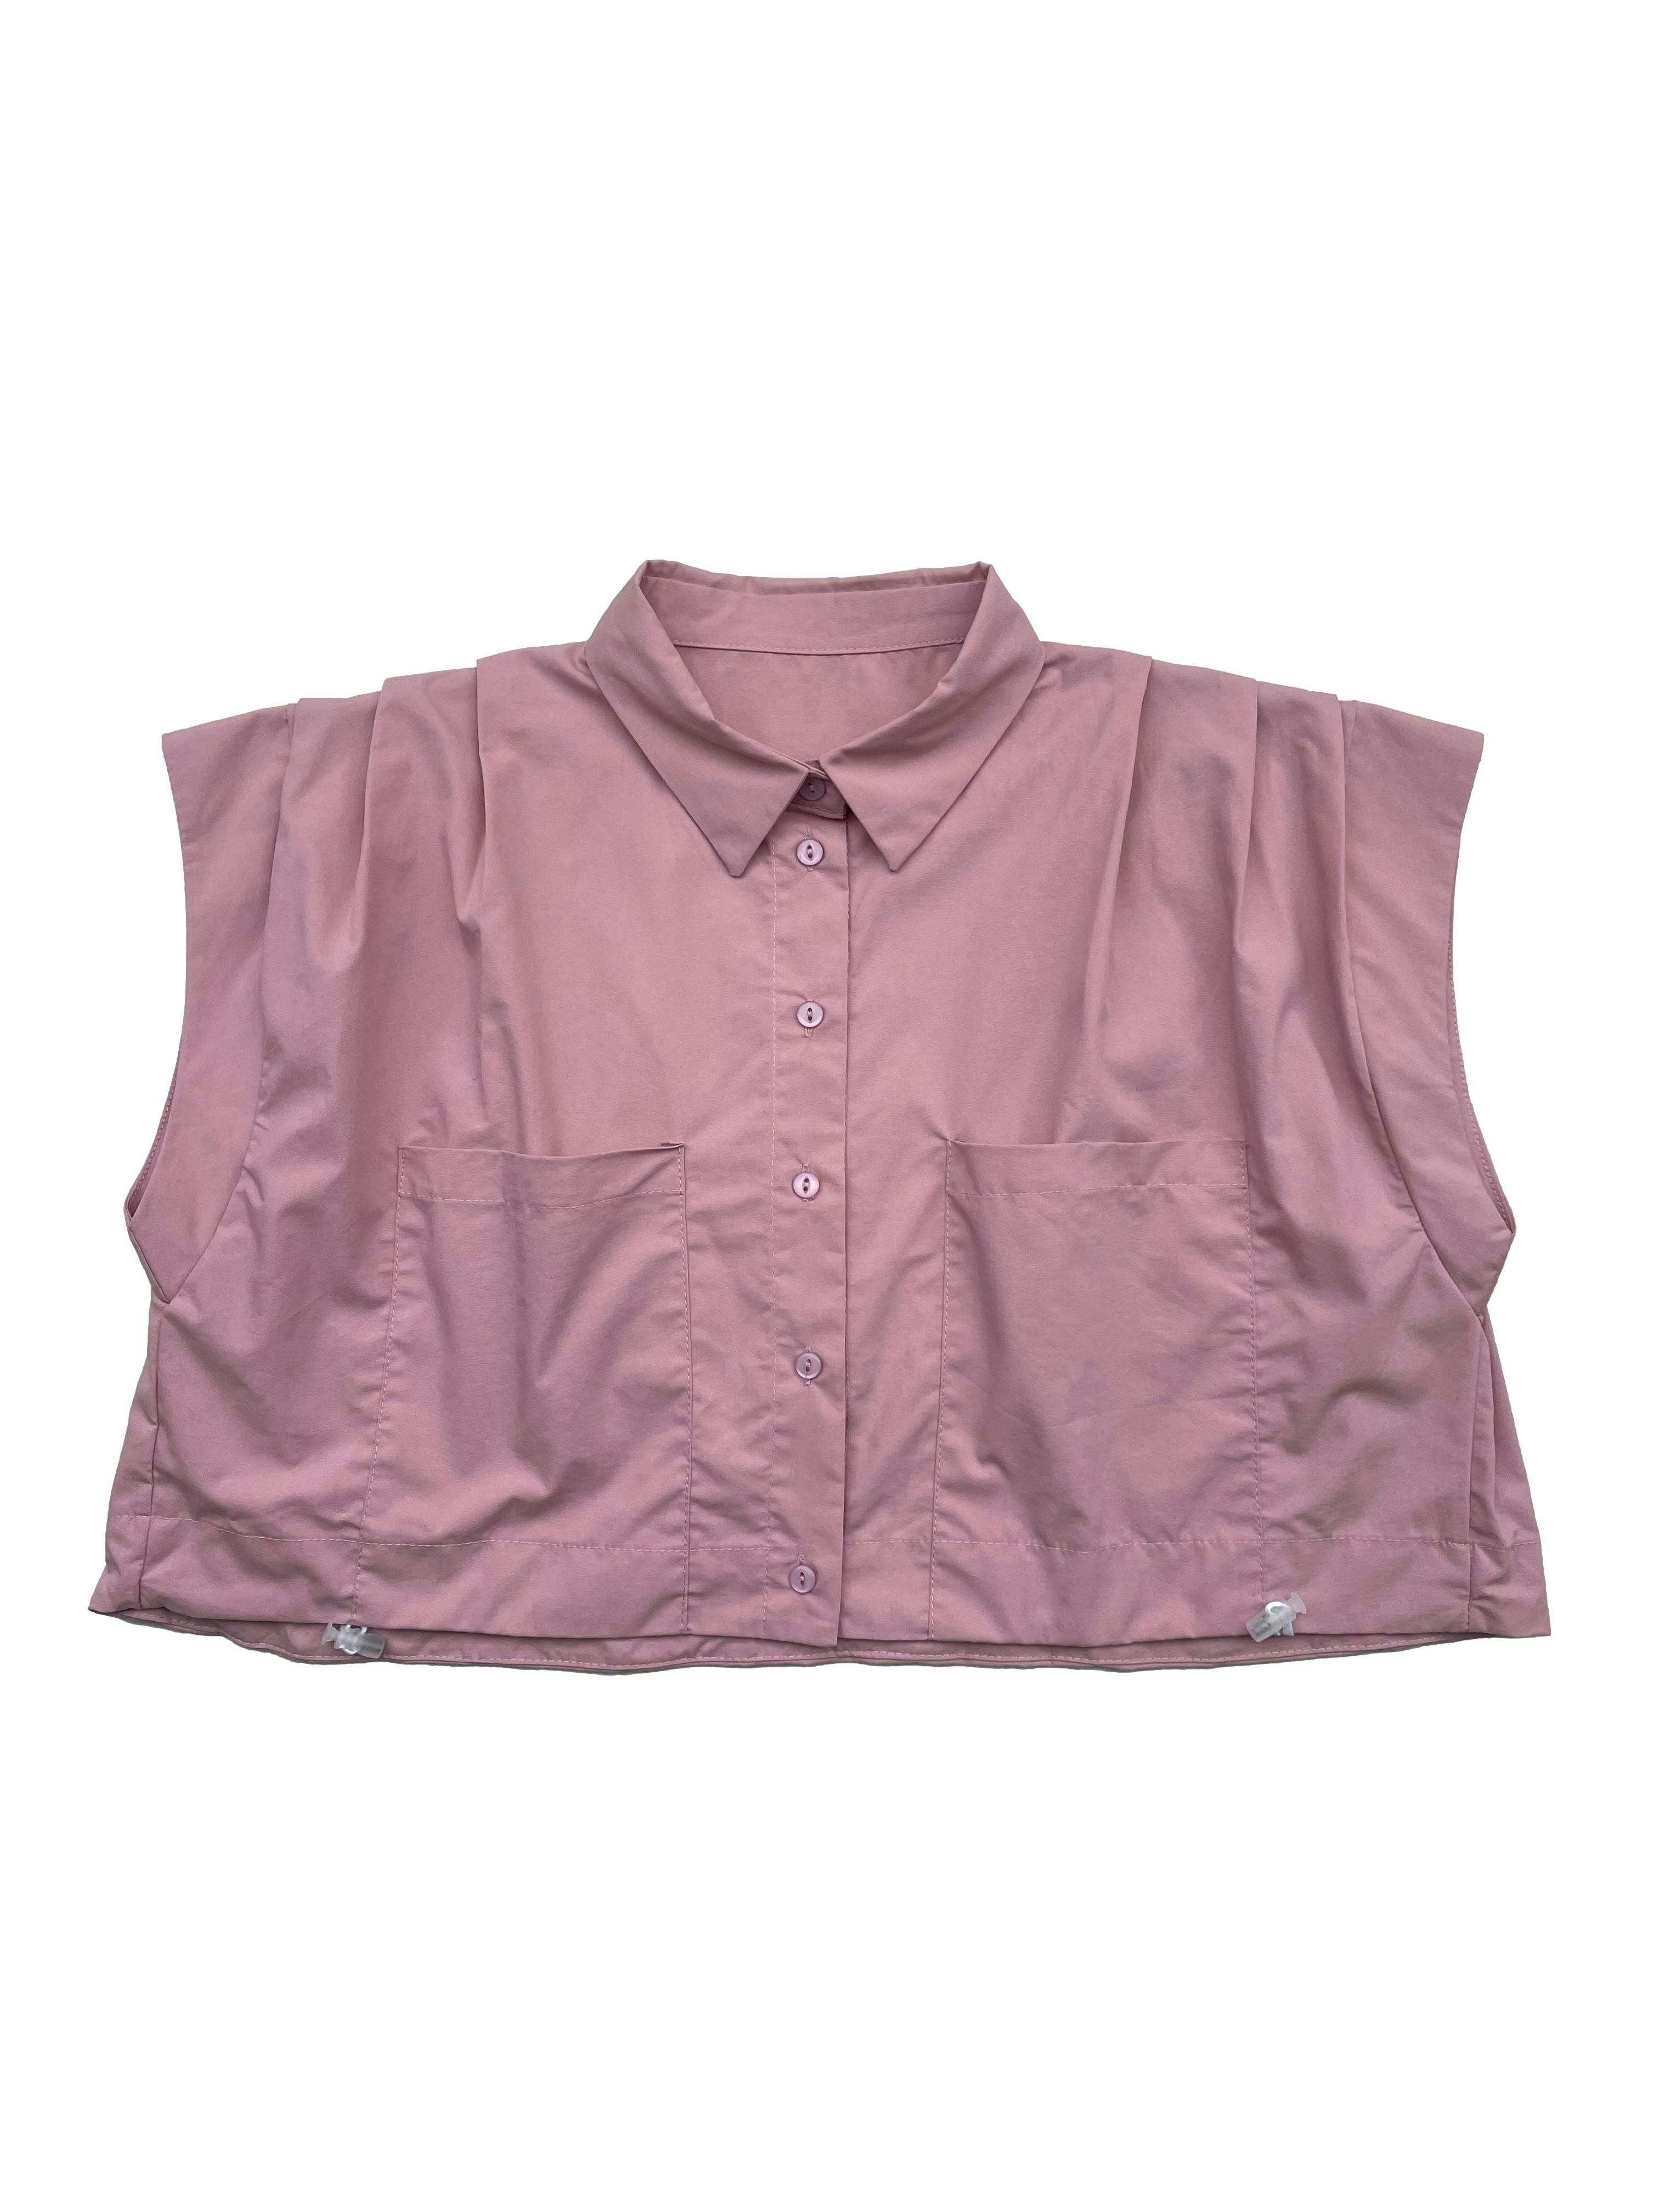 Blusa oversized crop cuello camisa, palo rosa, pliegues en hombros, basta regulable. Busto 120cm Largo 40cm